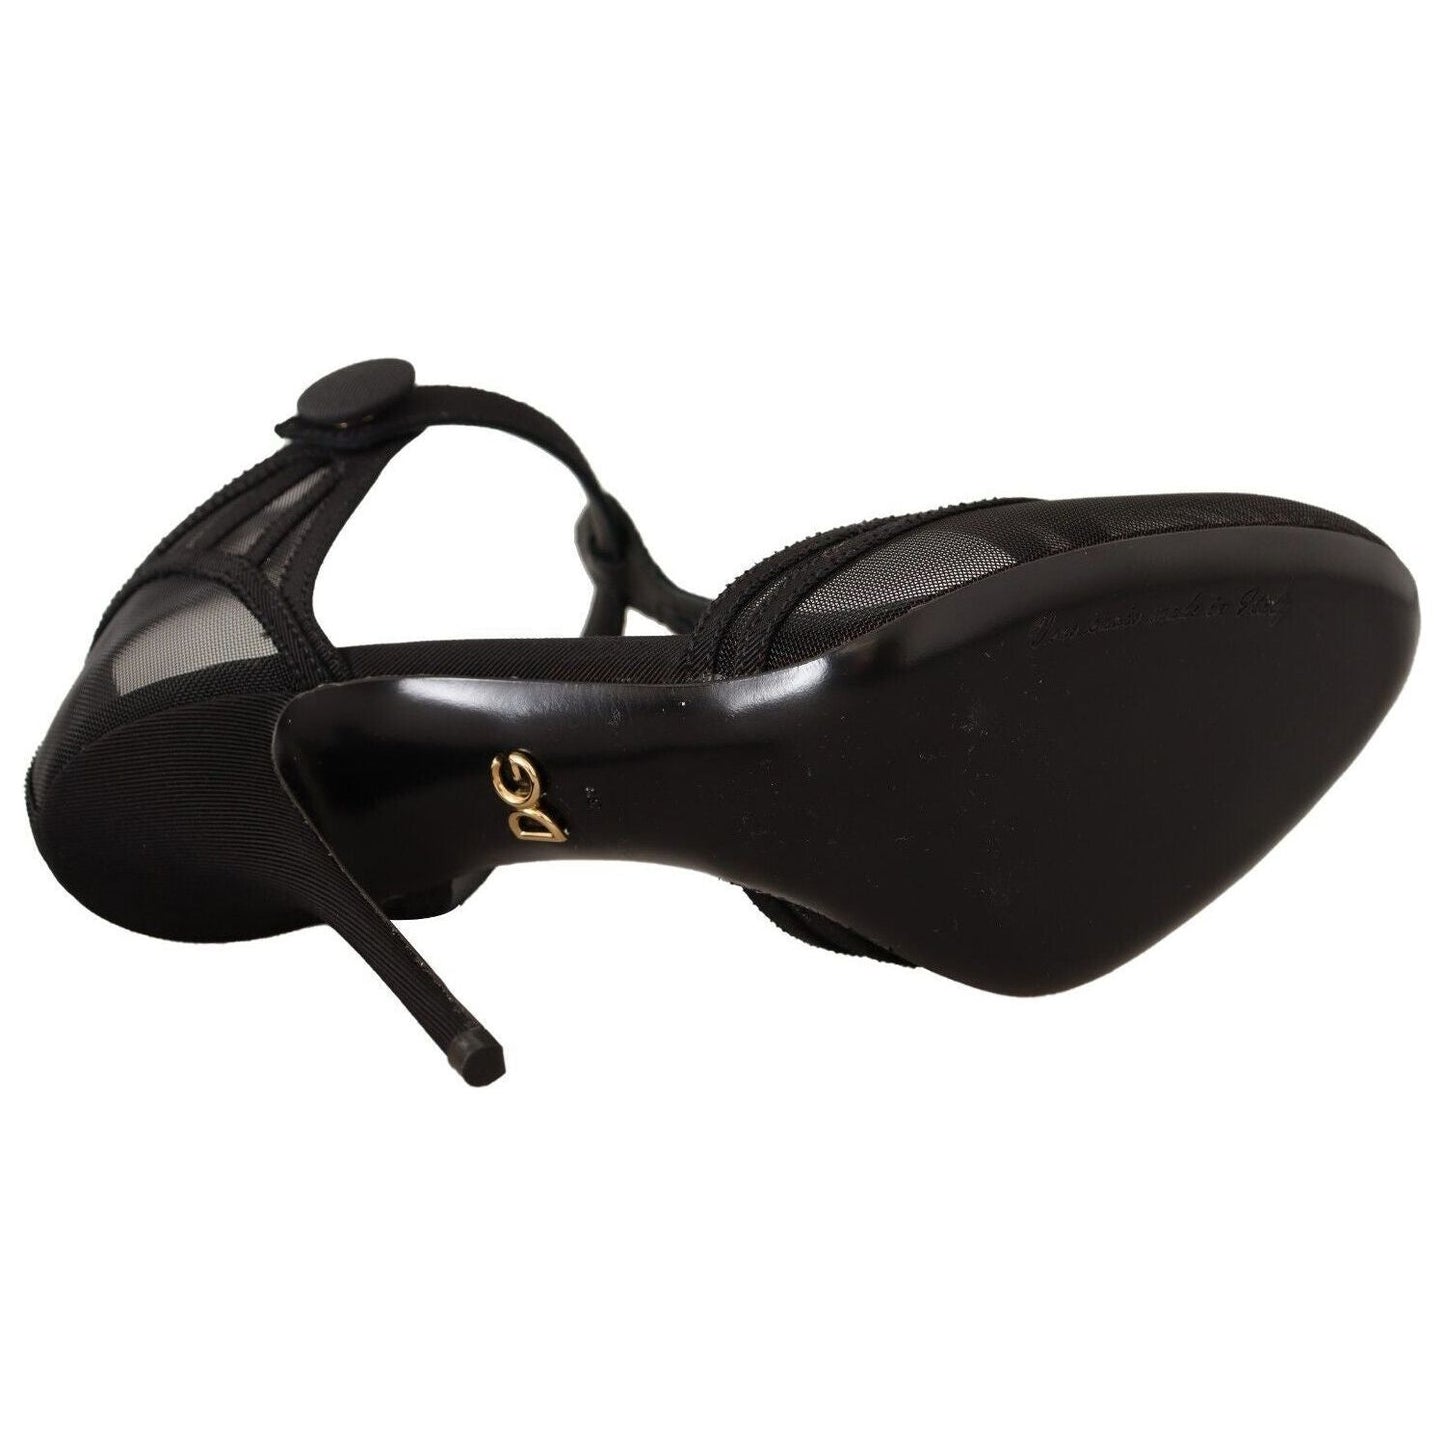 Dolce & Gabbana Elegant Mesh T-Strap Stiletto Pumps black-mesh-t-strap-stiletto-heels-pumps-shoes s-l1600-5-80-8d8fcd8d-82a.jpg